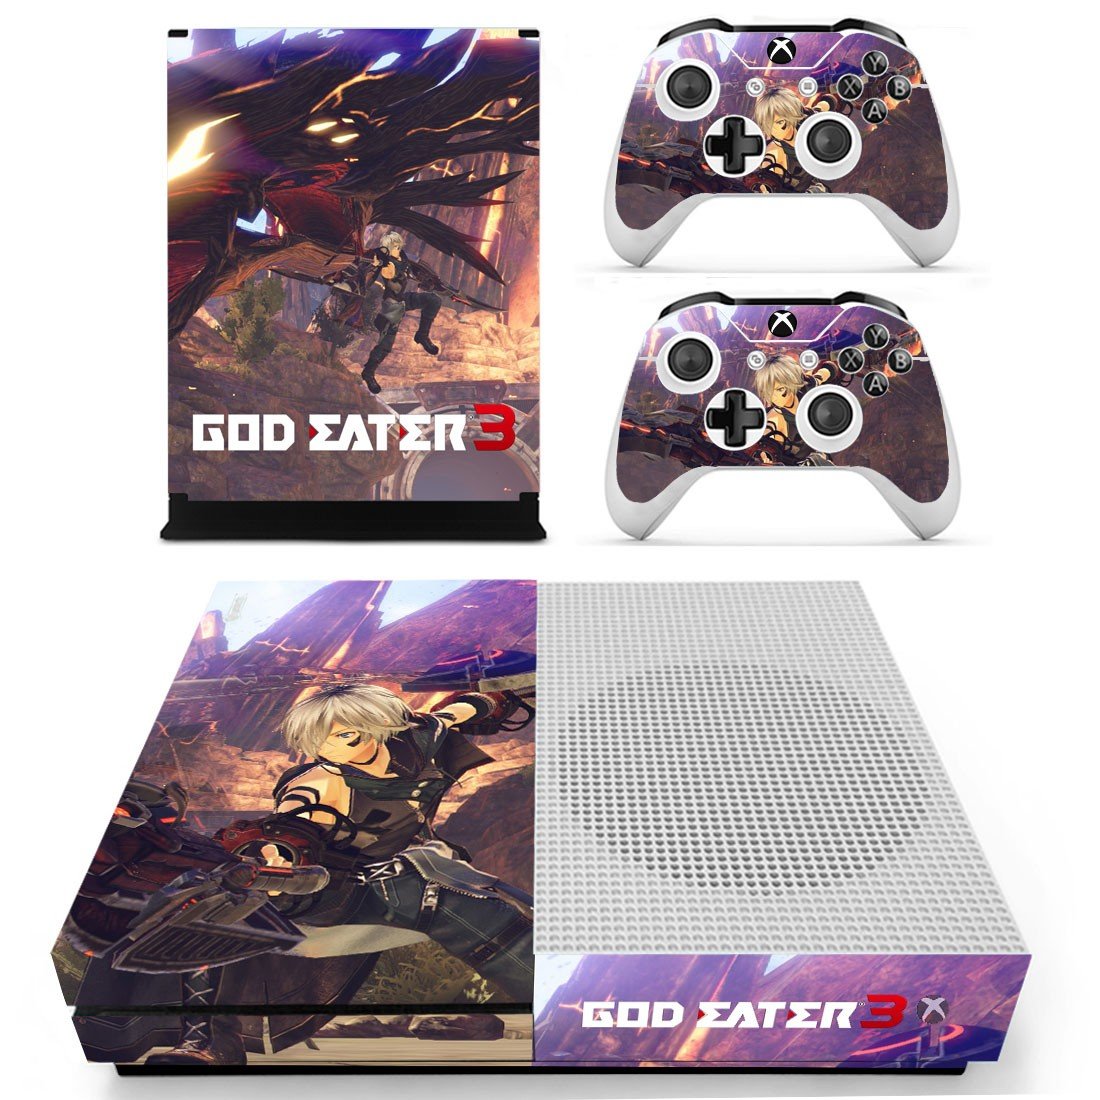 Xbox One S Skin Cover - God Eater 3 Design 5